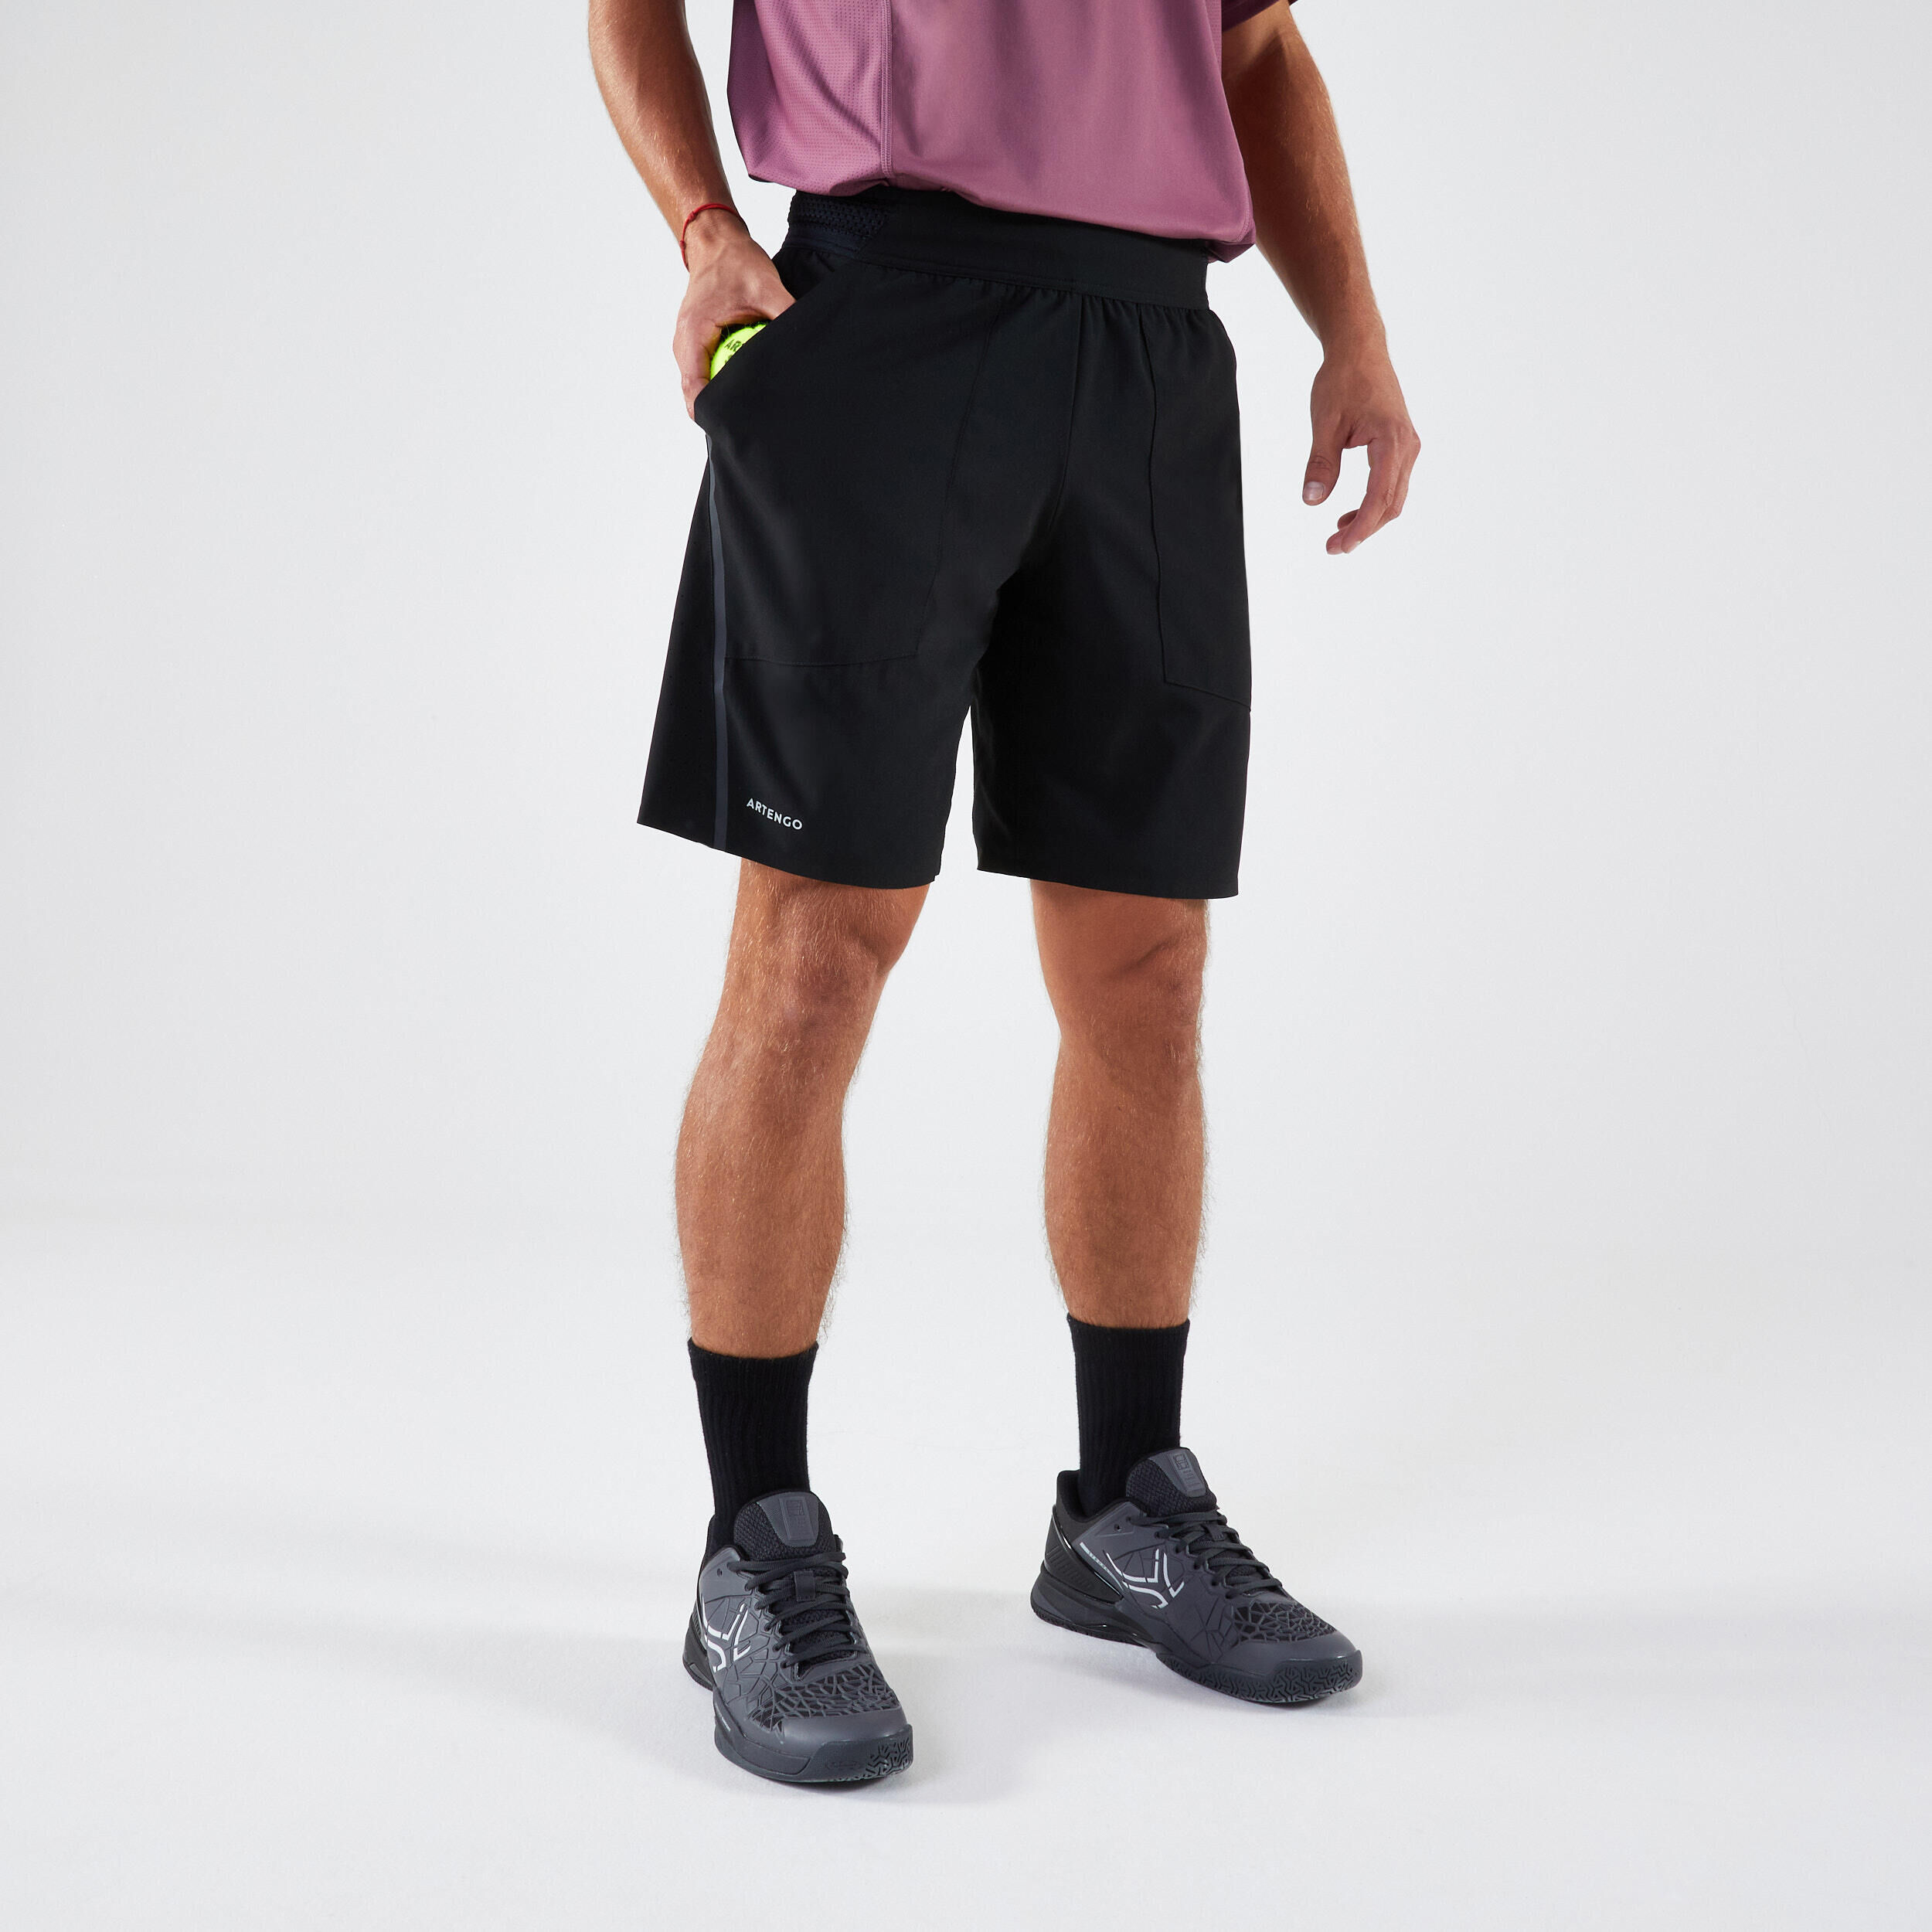 ARTENGO Men's Breathable Tennis Shorts Dry+ Gaël Monfils - Black